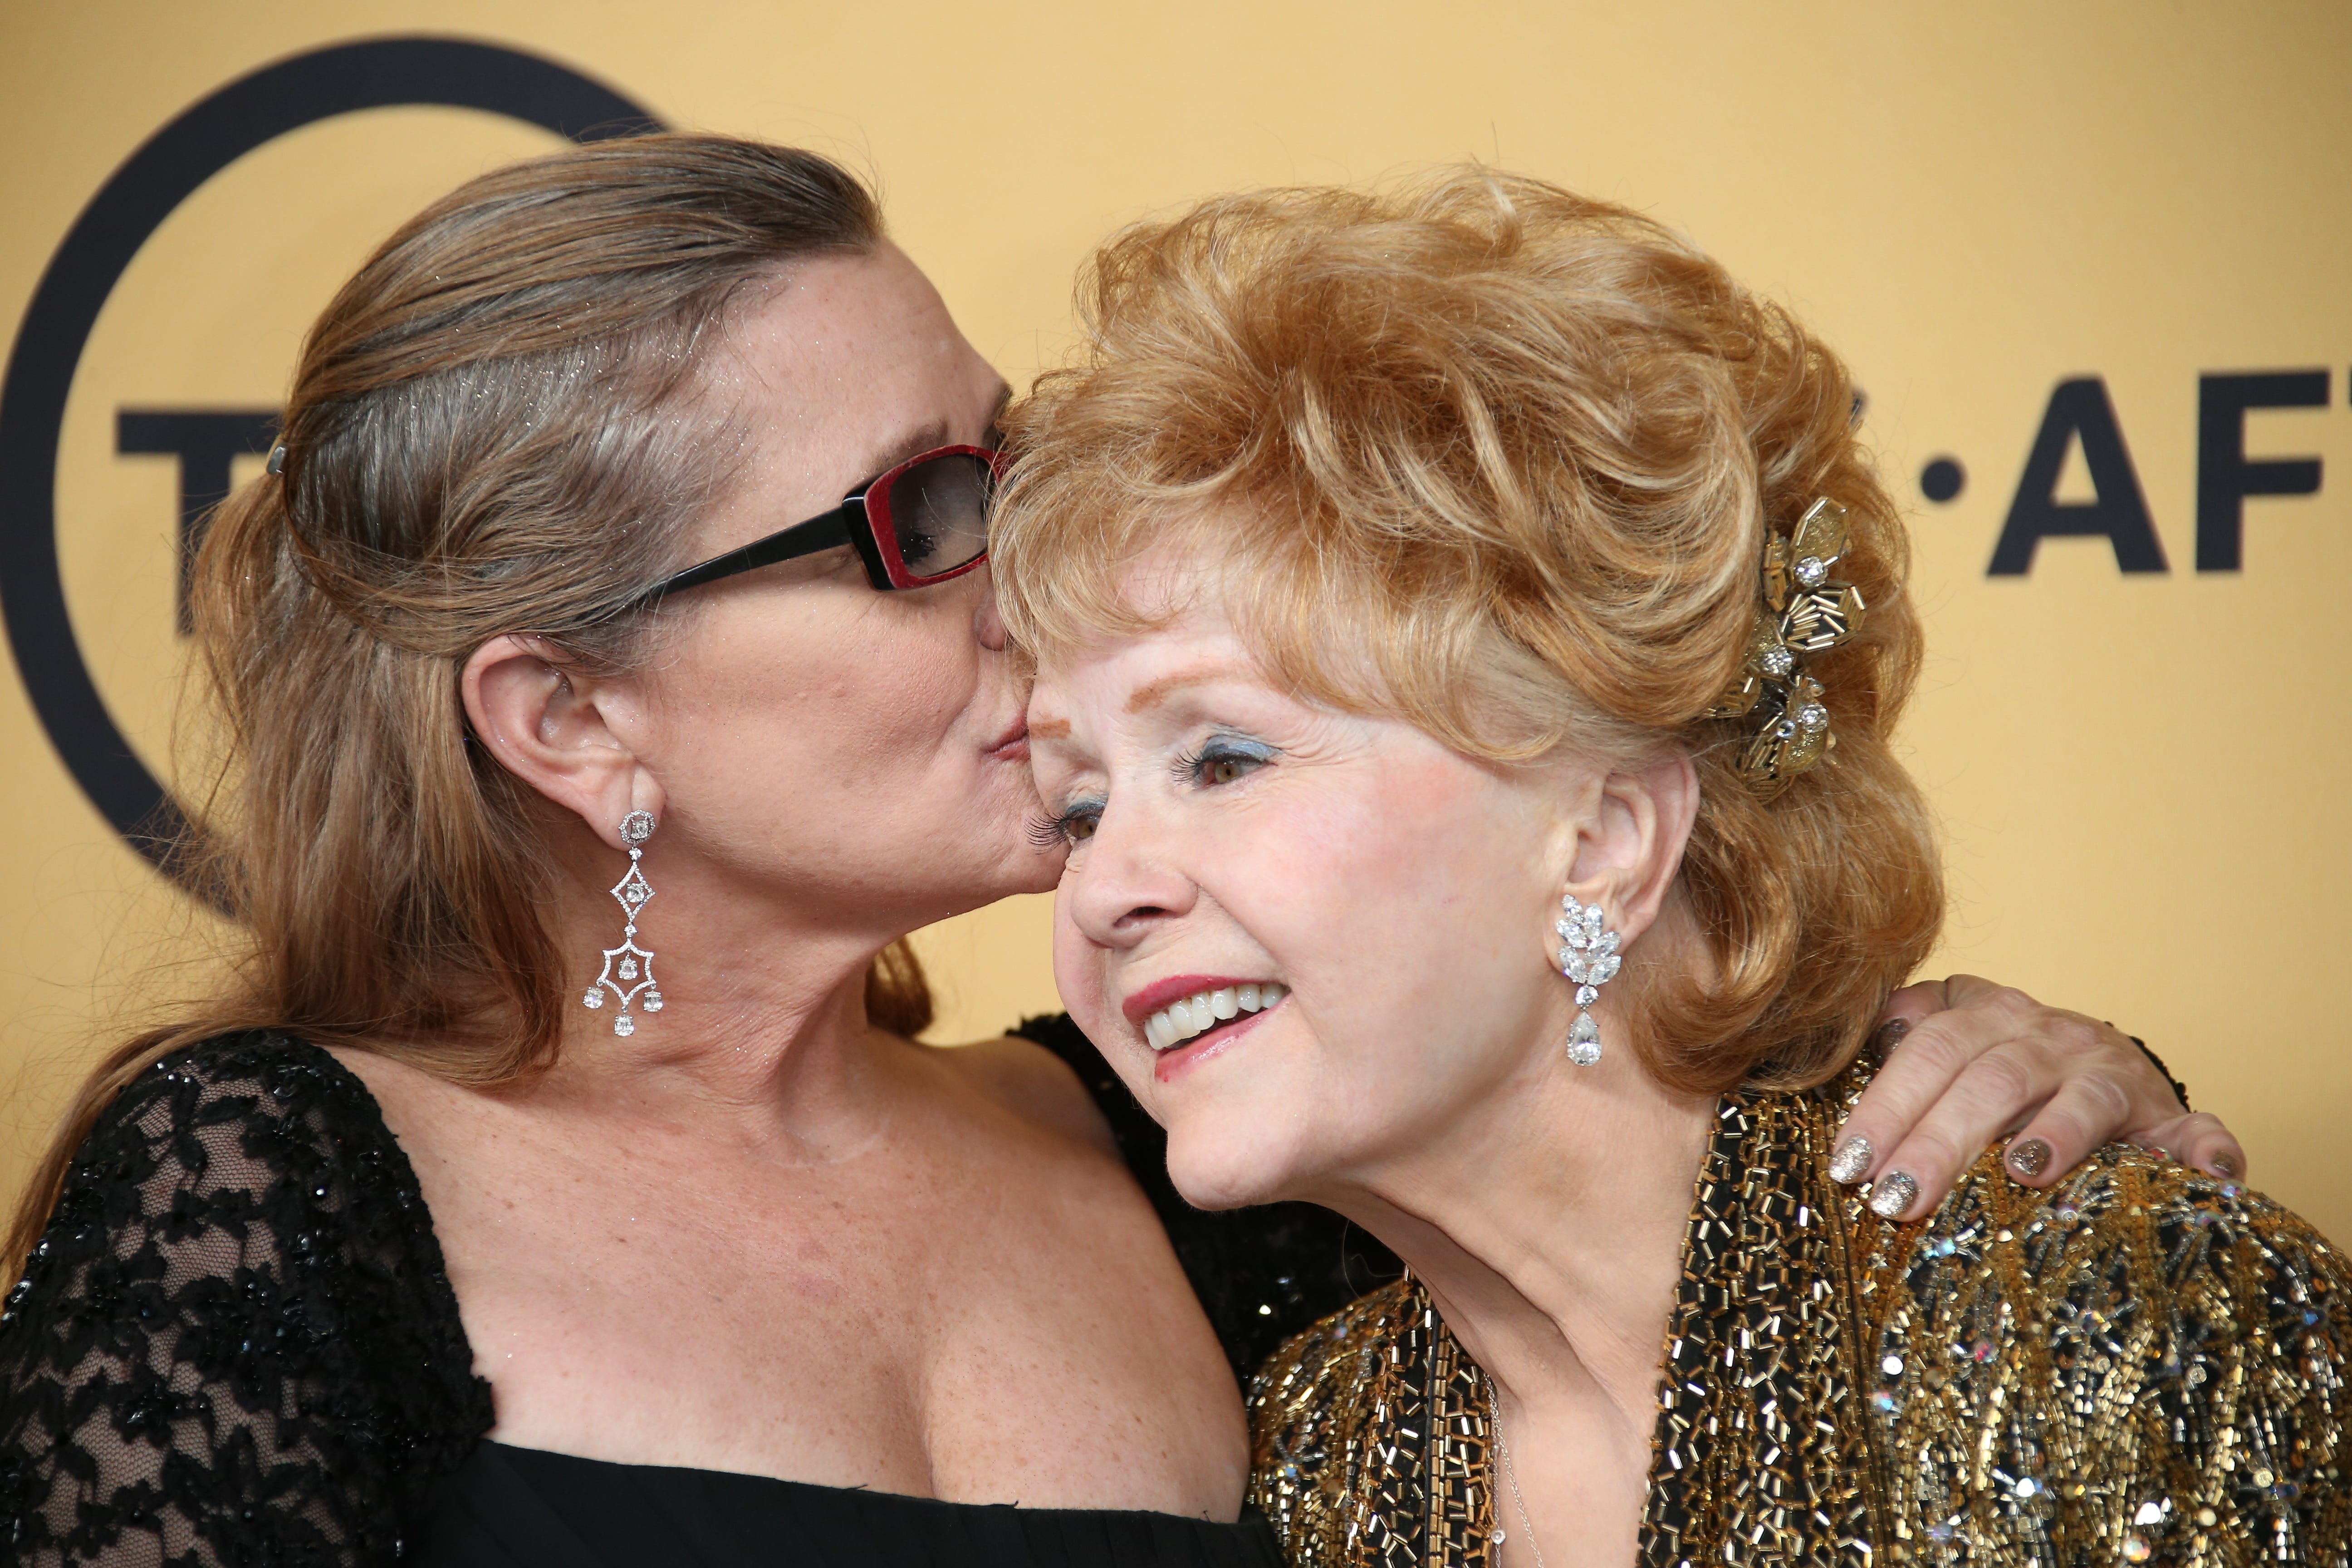 As Debbie Reynolds reminded us, grief can make us sick